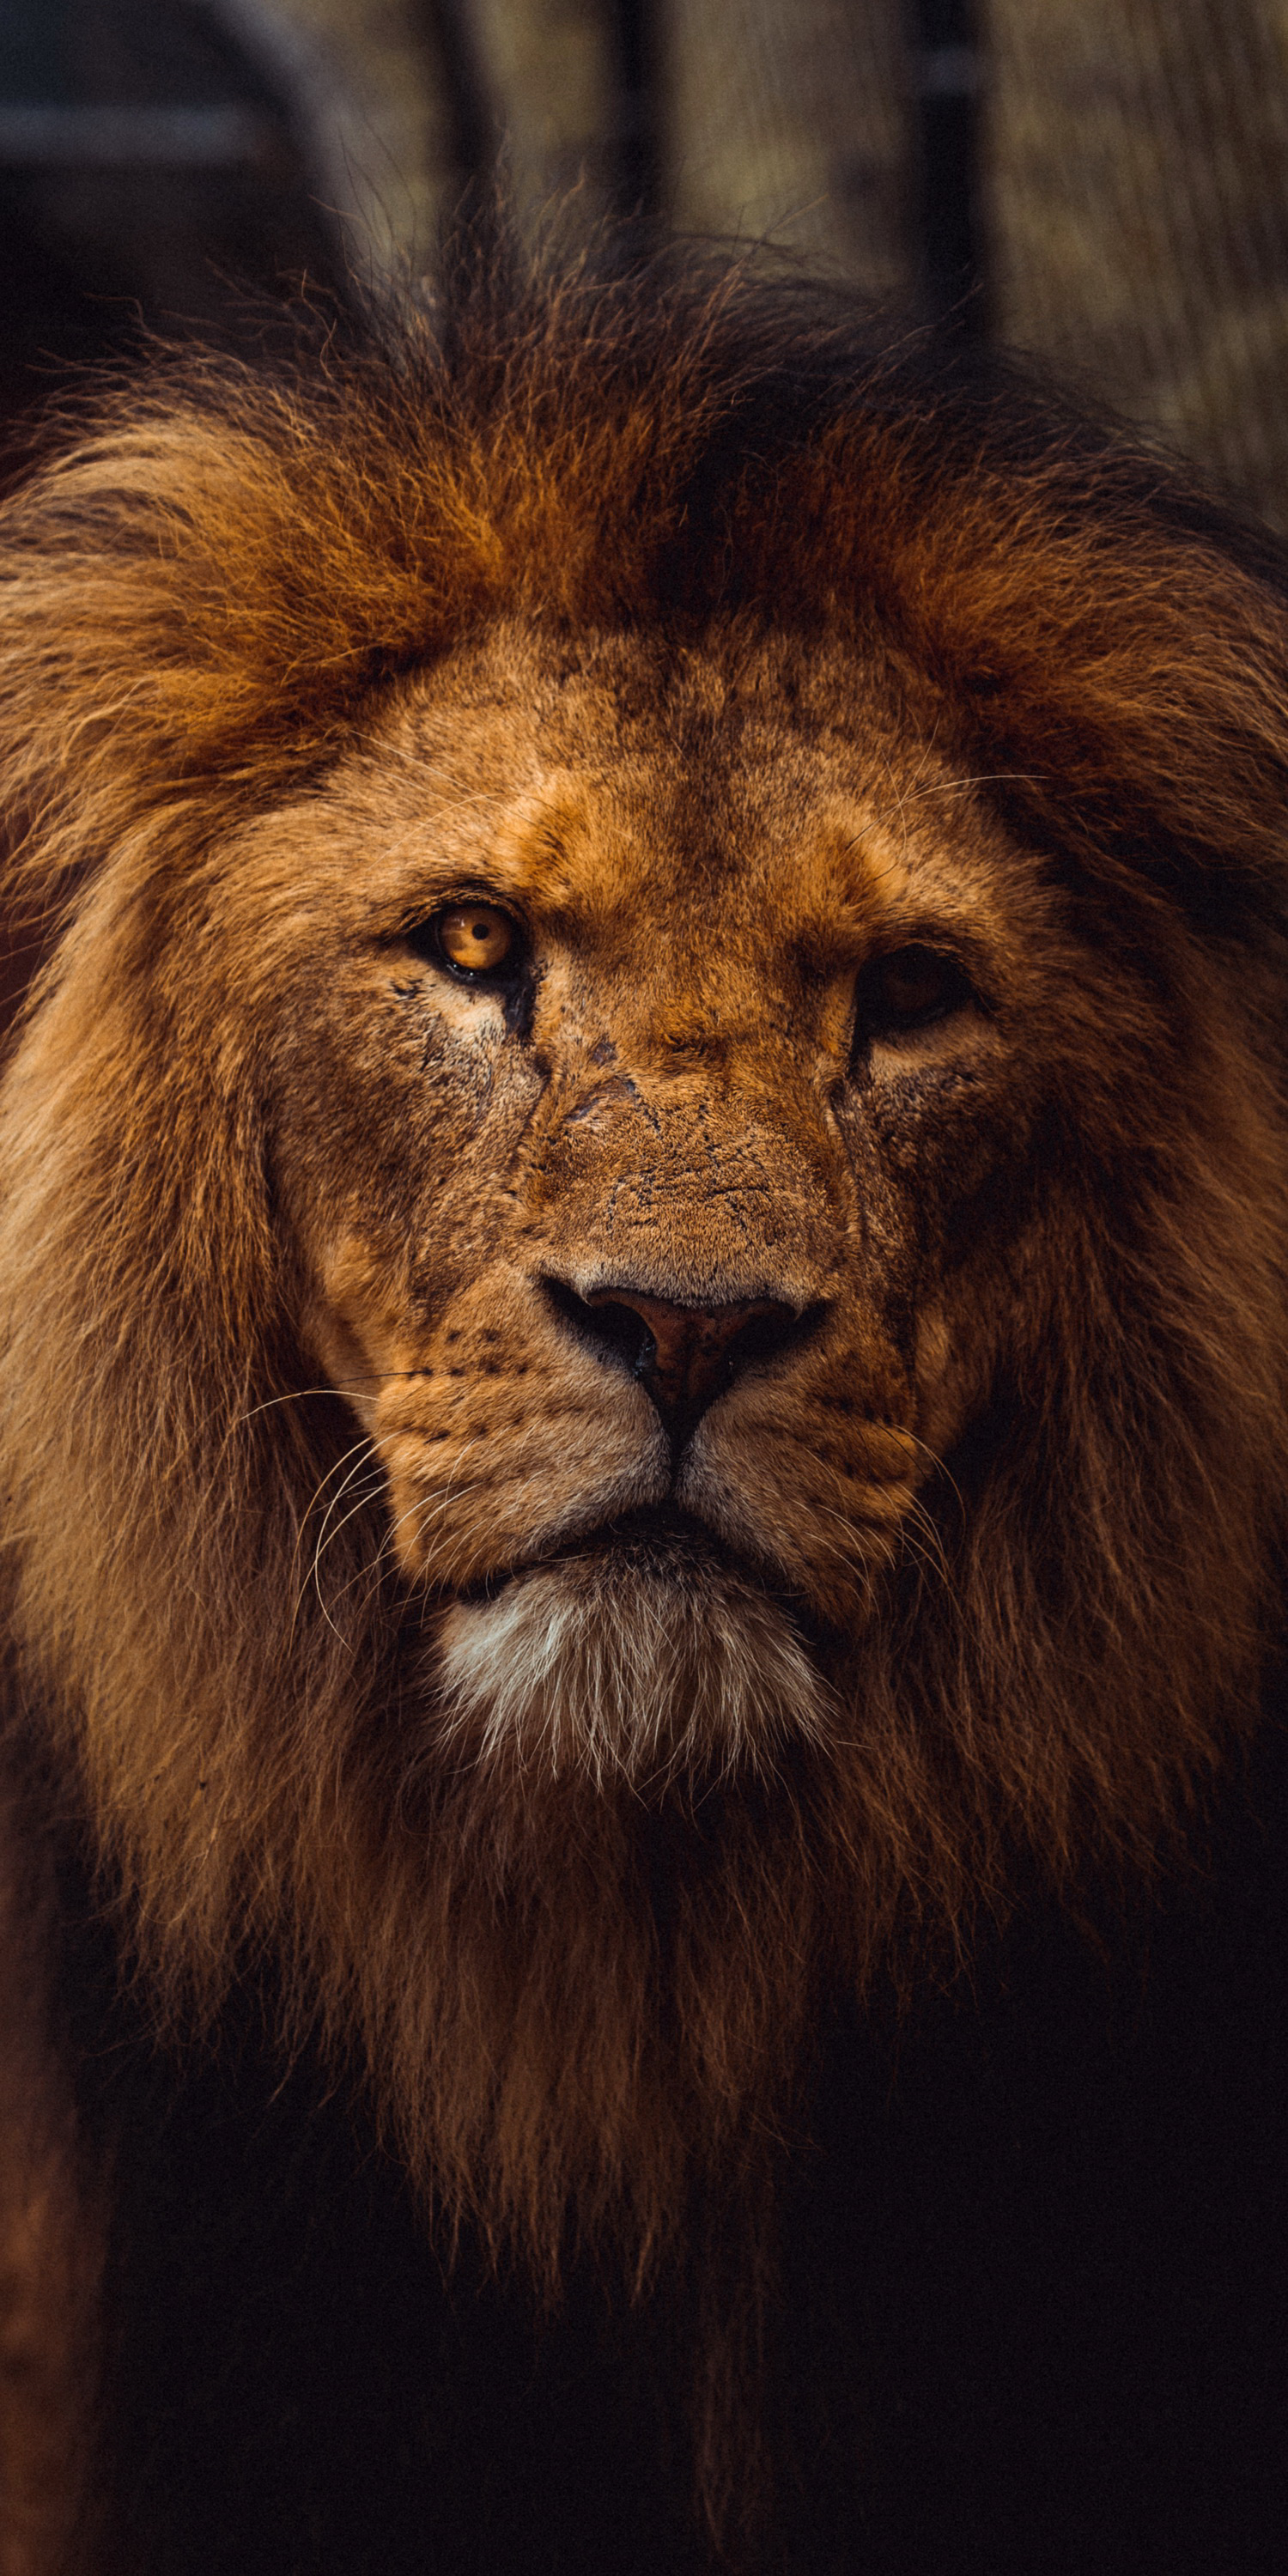 44+] Lion Wallpaper HD 1080P - WallpaperSafari